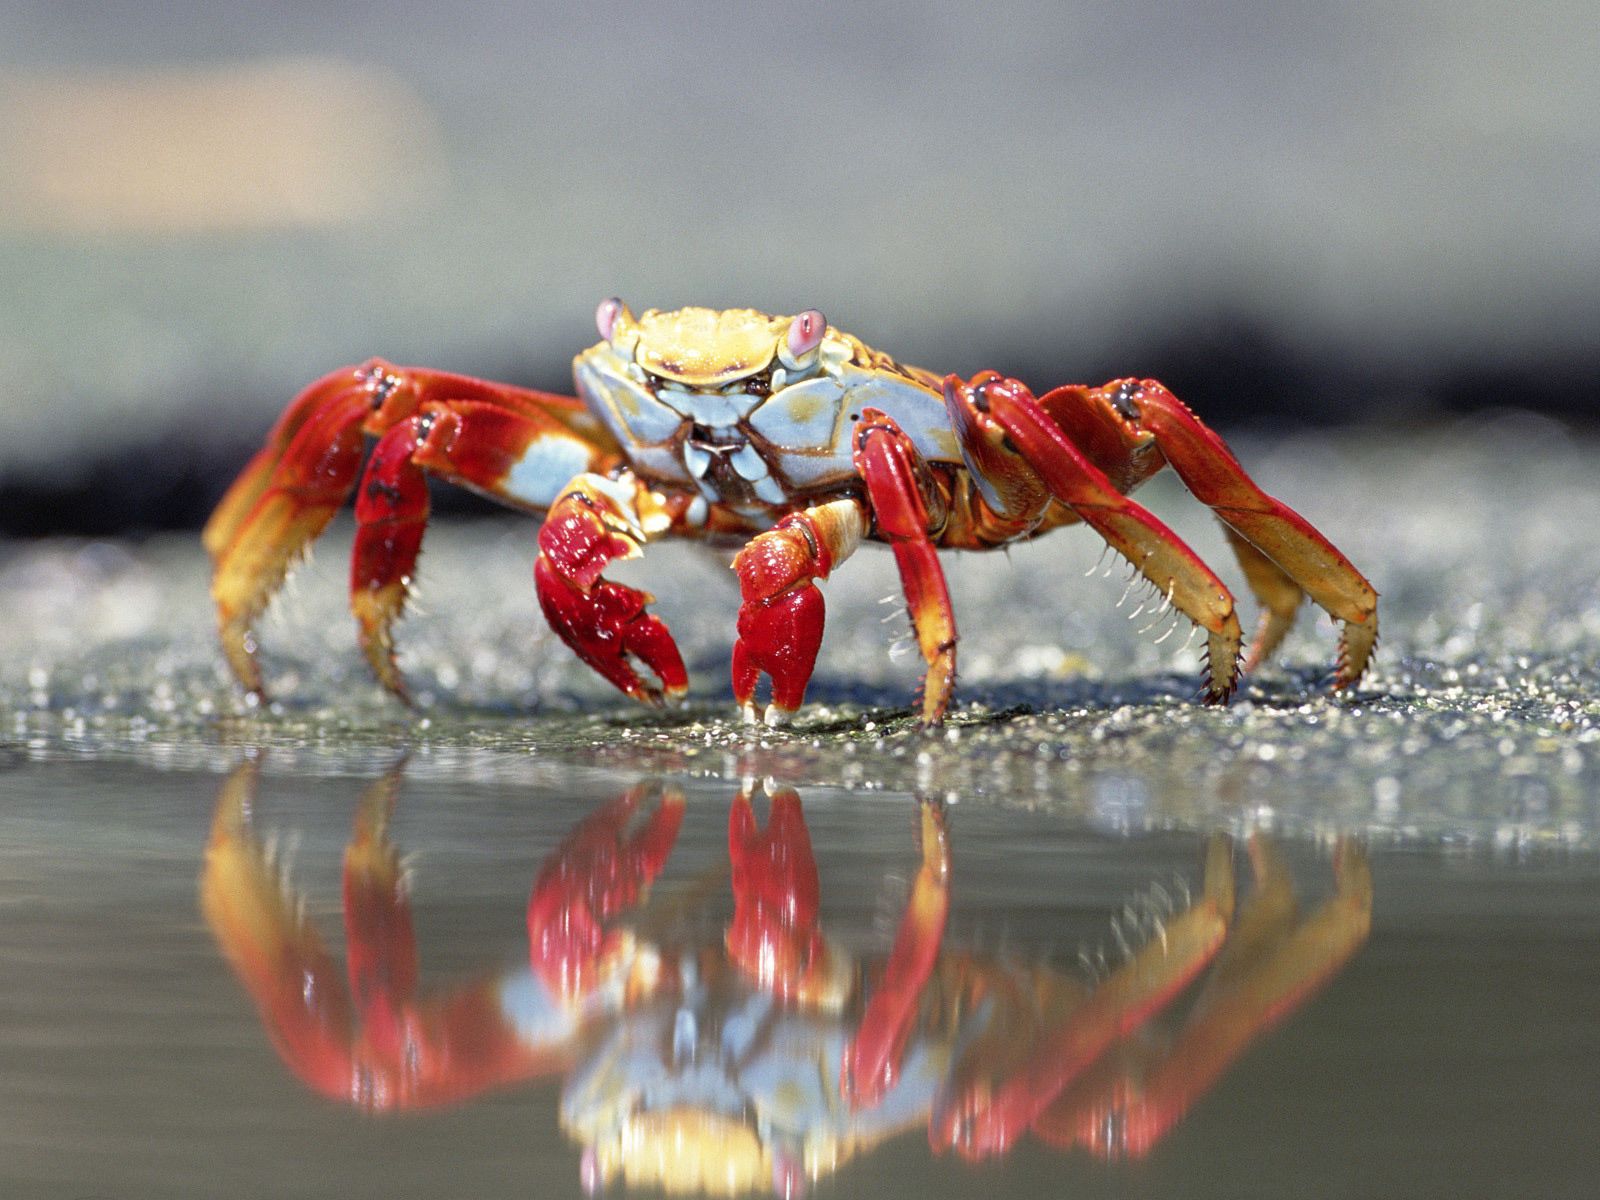 Best Crab Full HD Wallpaper